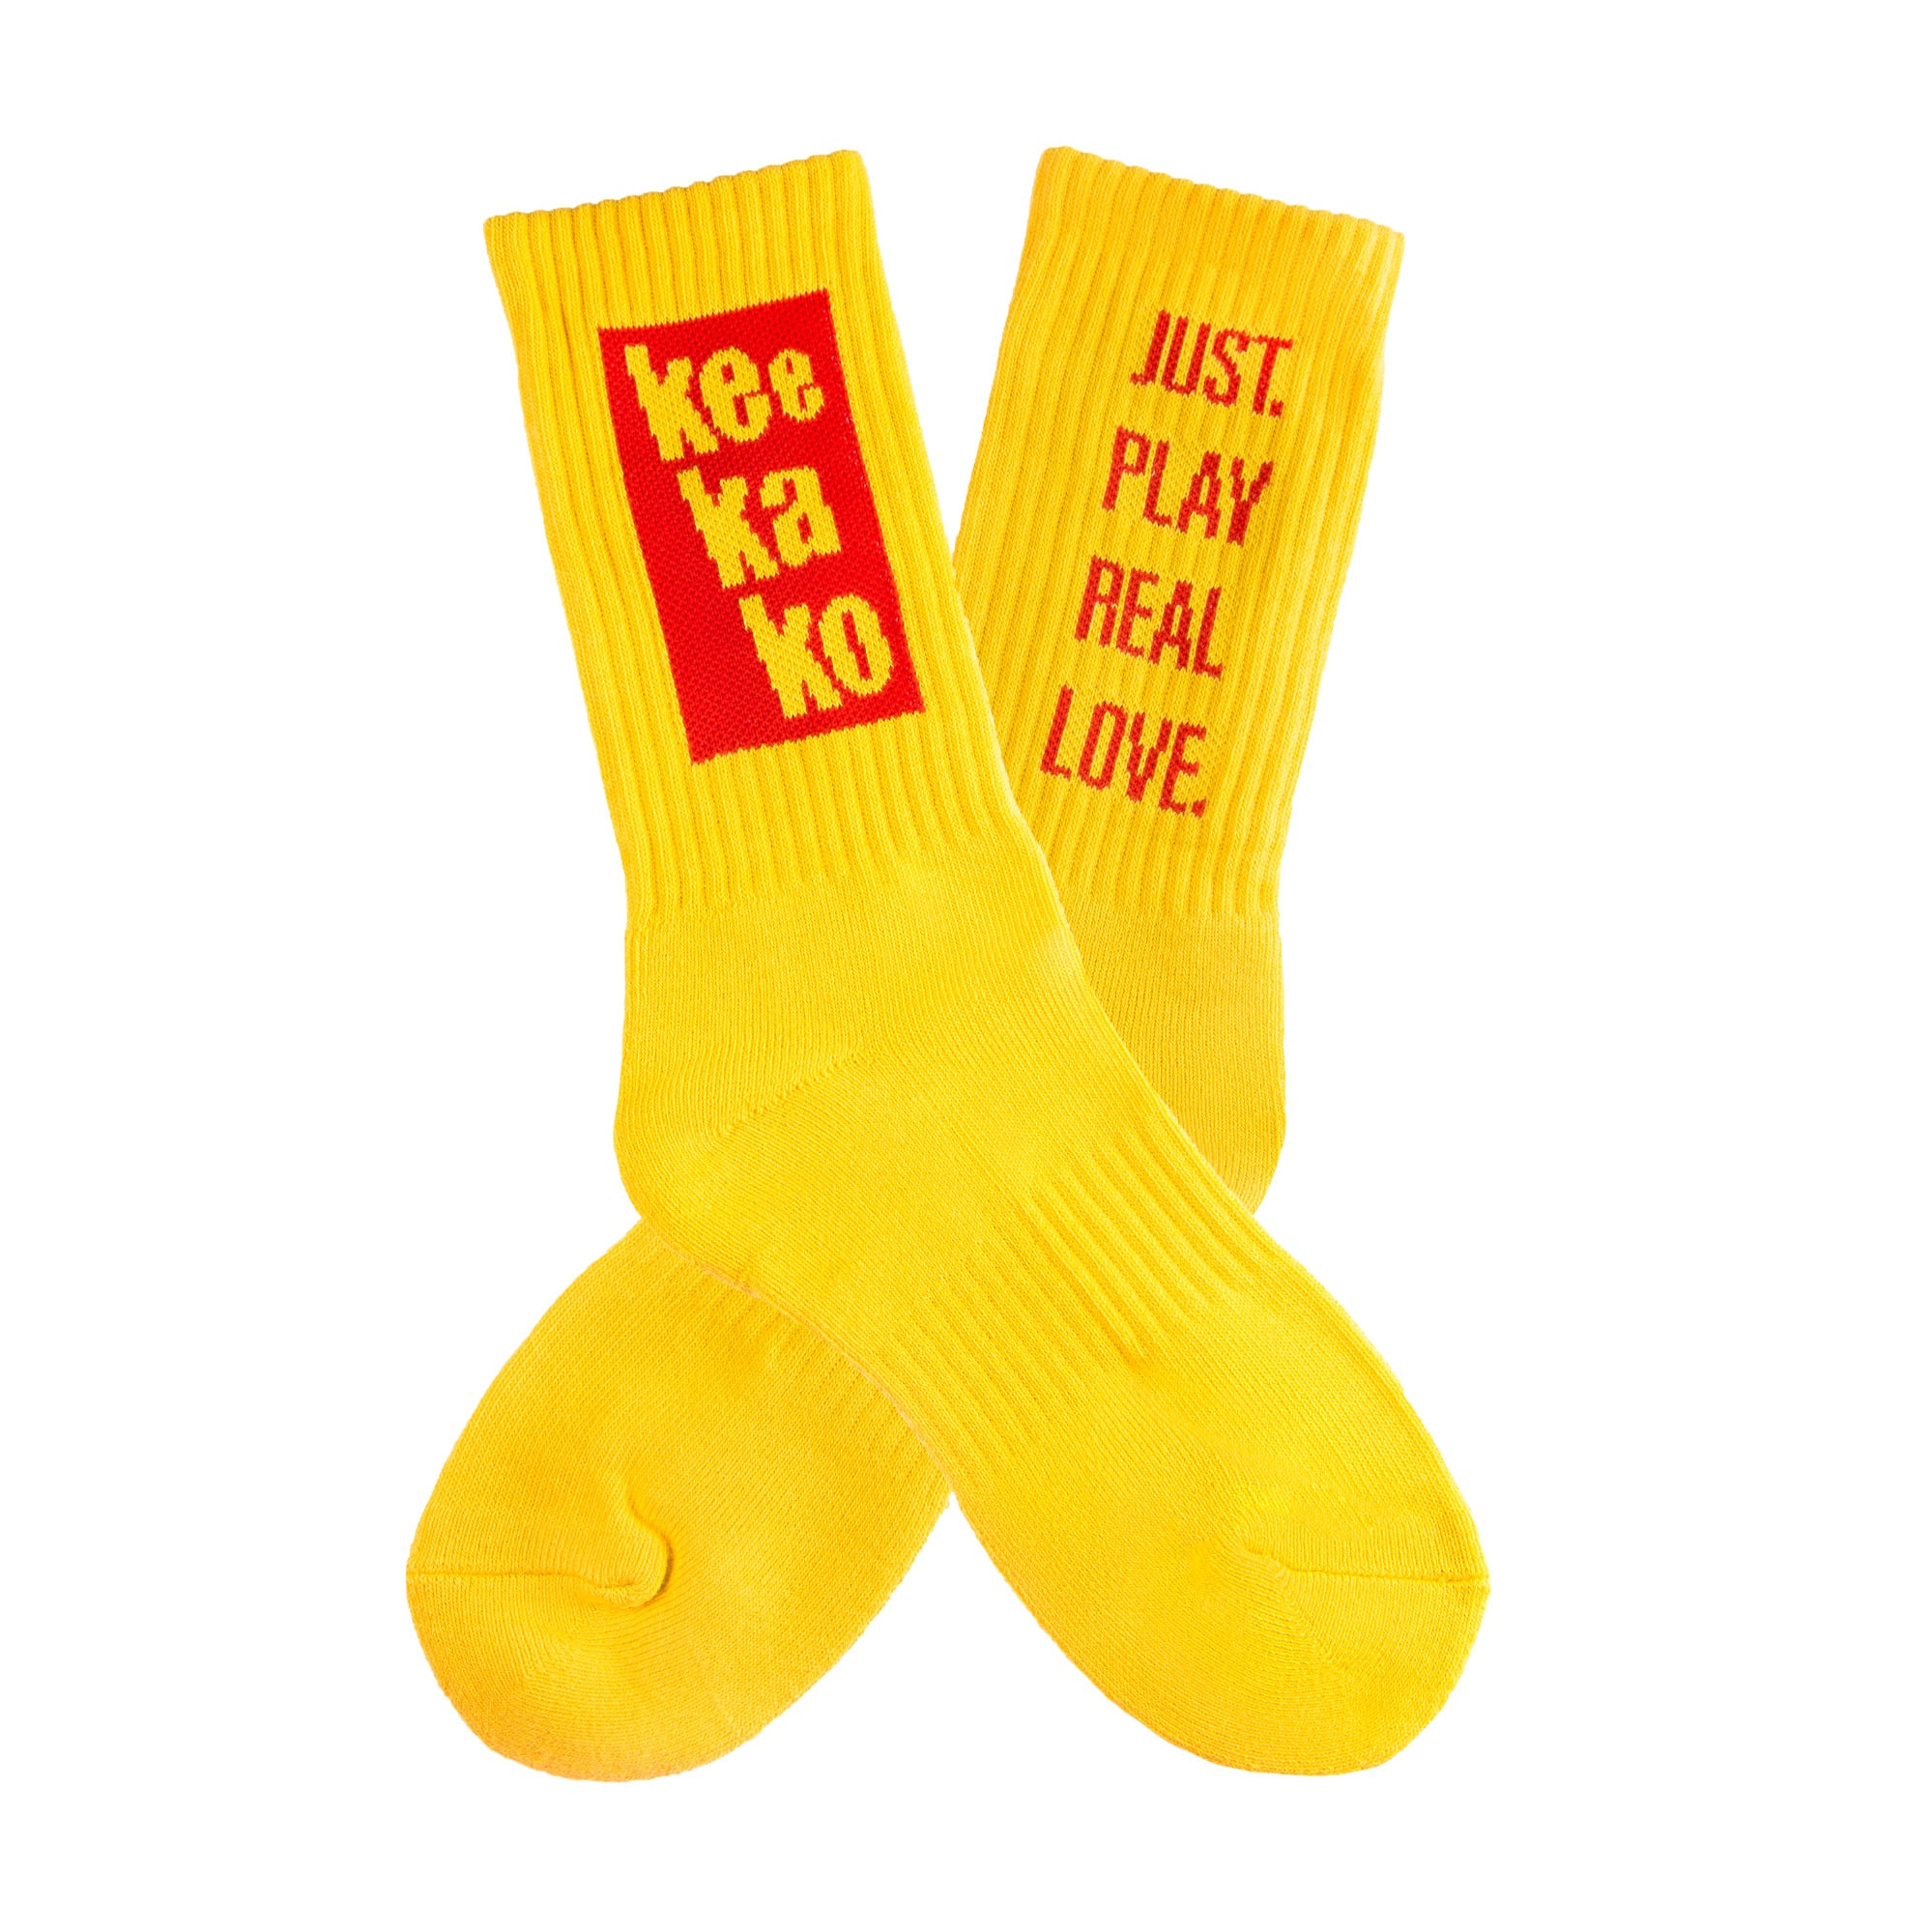 Just,play,real,love socks